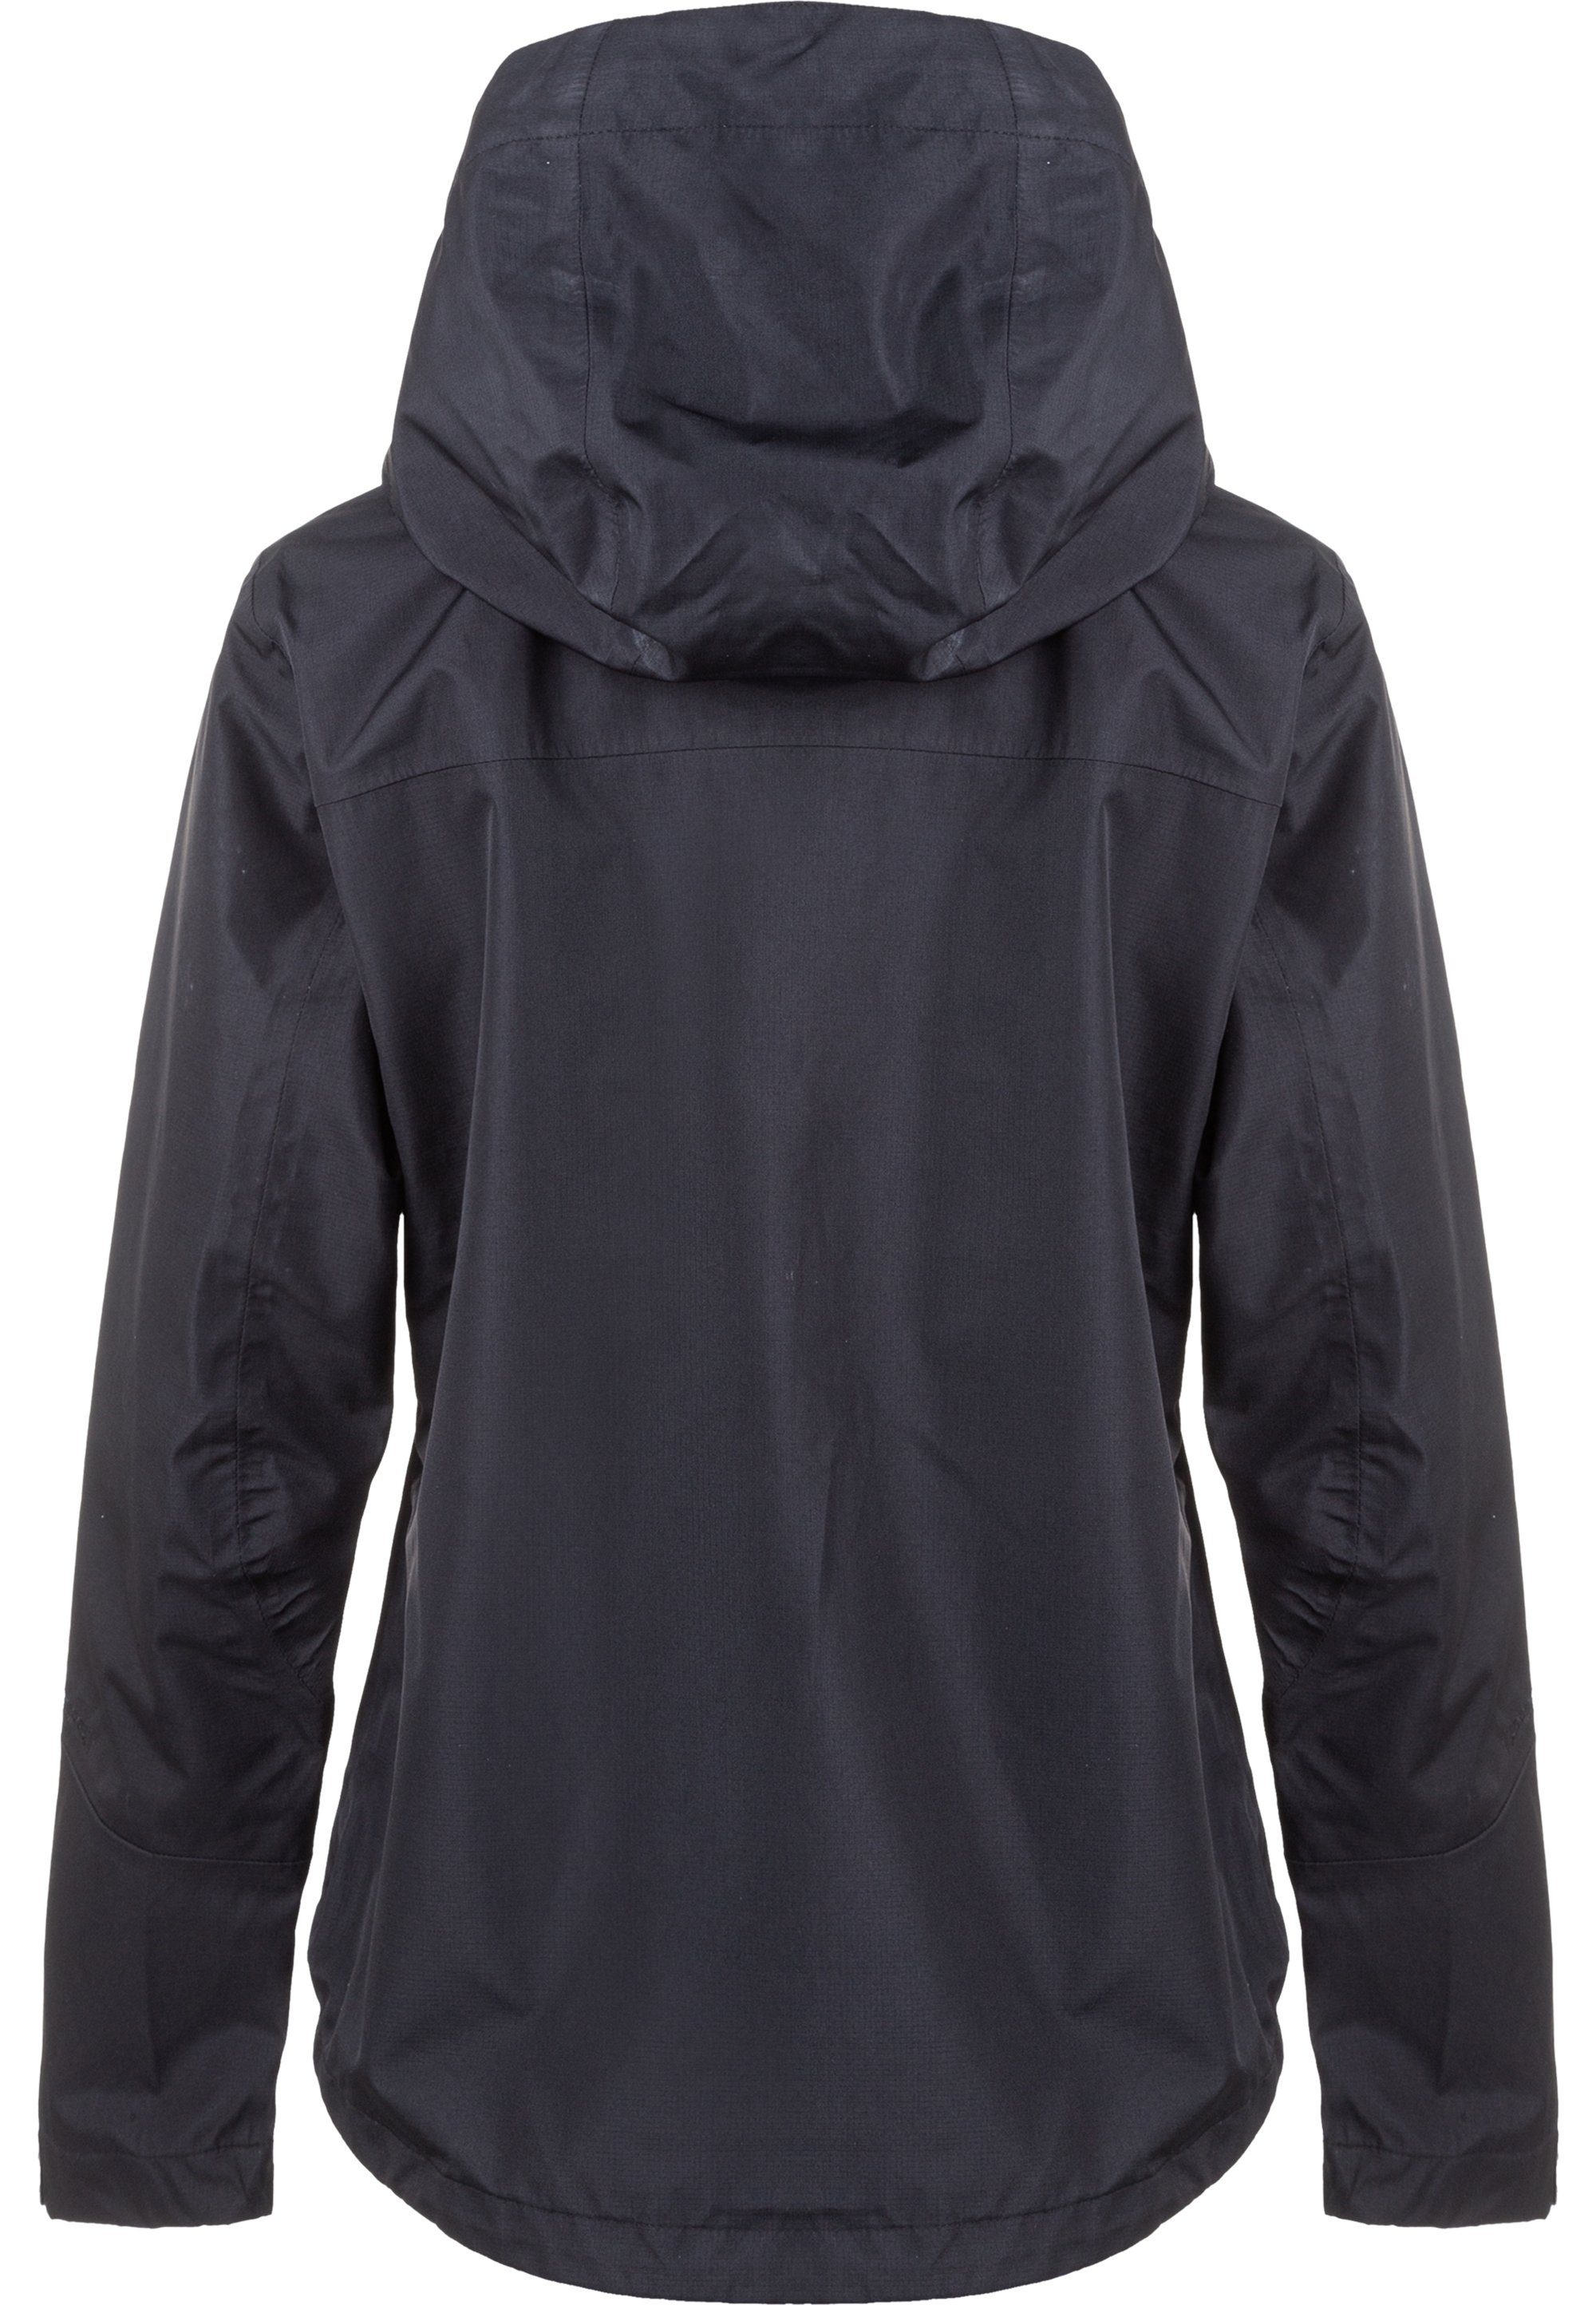 WHISTLER Softshelljacke BROOK schwarz praktischer 15000 W-PRO Kapuze mit W Jacket Shell